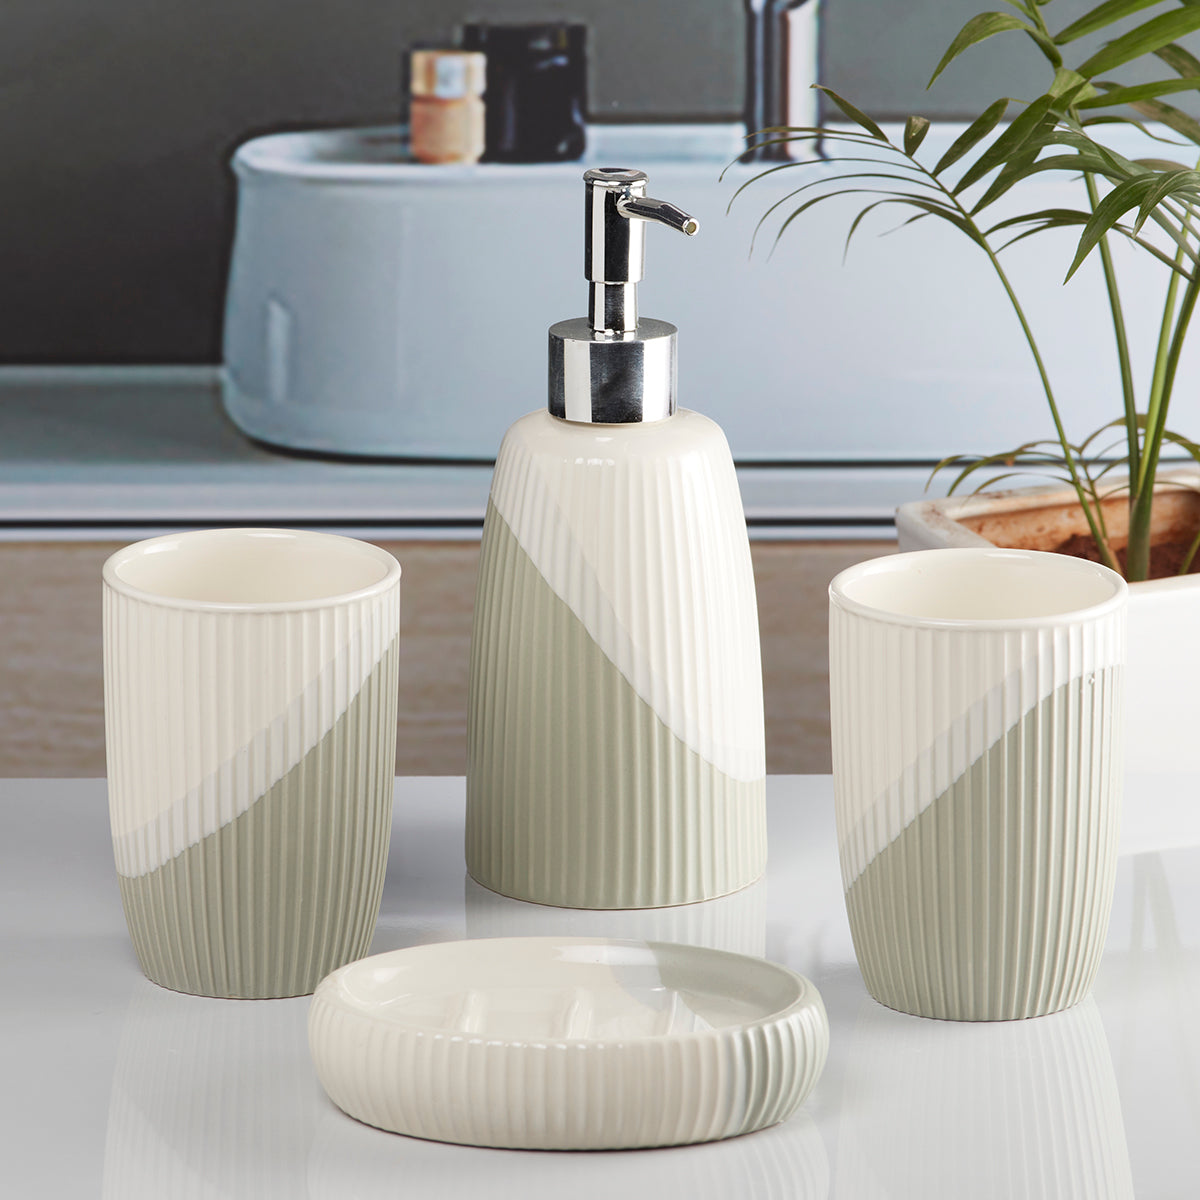 Ceramic Bathroom Accessories Set of 4 Bath Set with Soap Dispenser (10101)